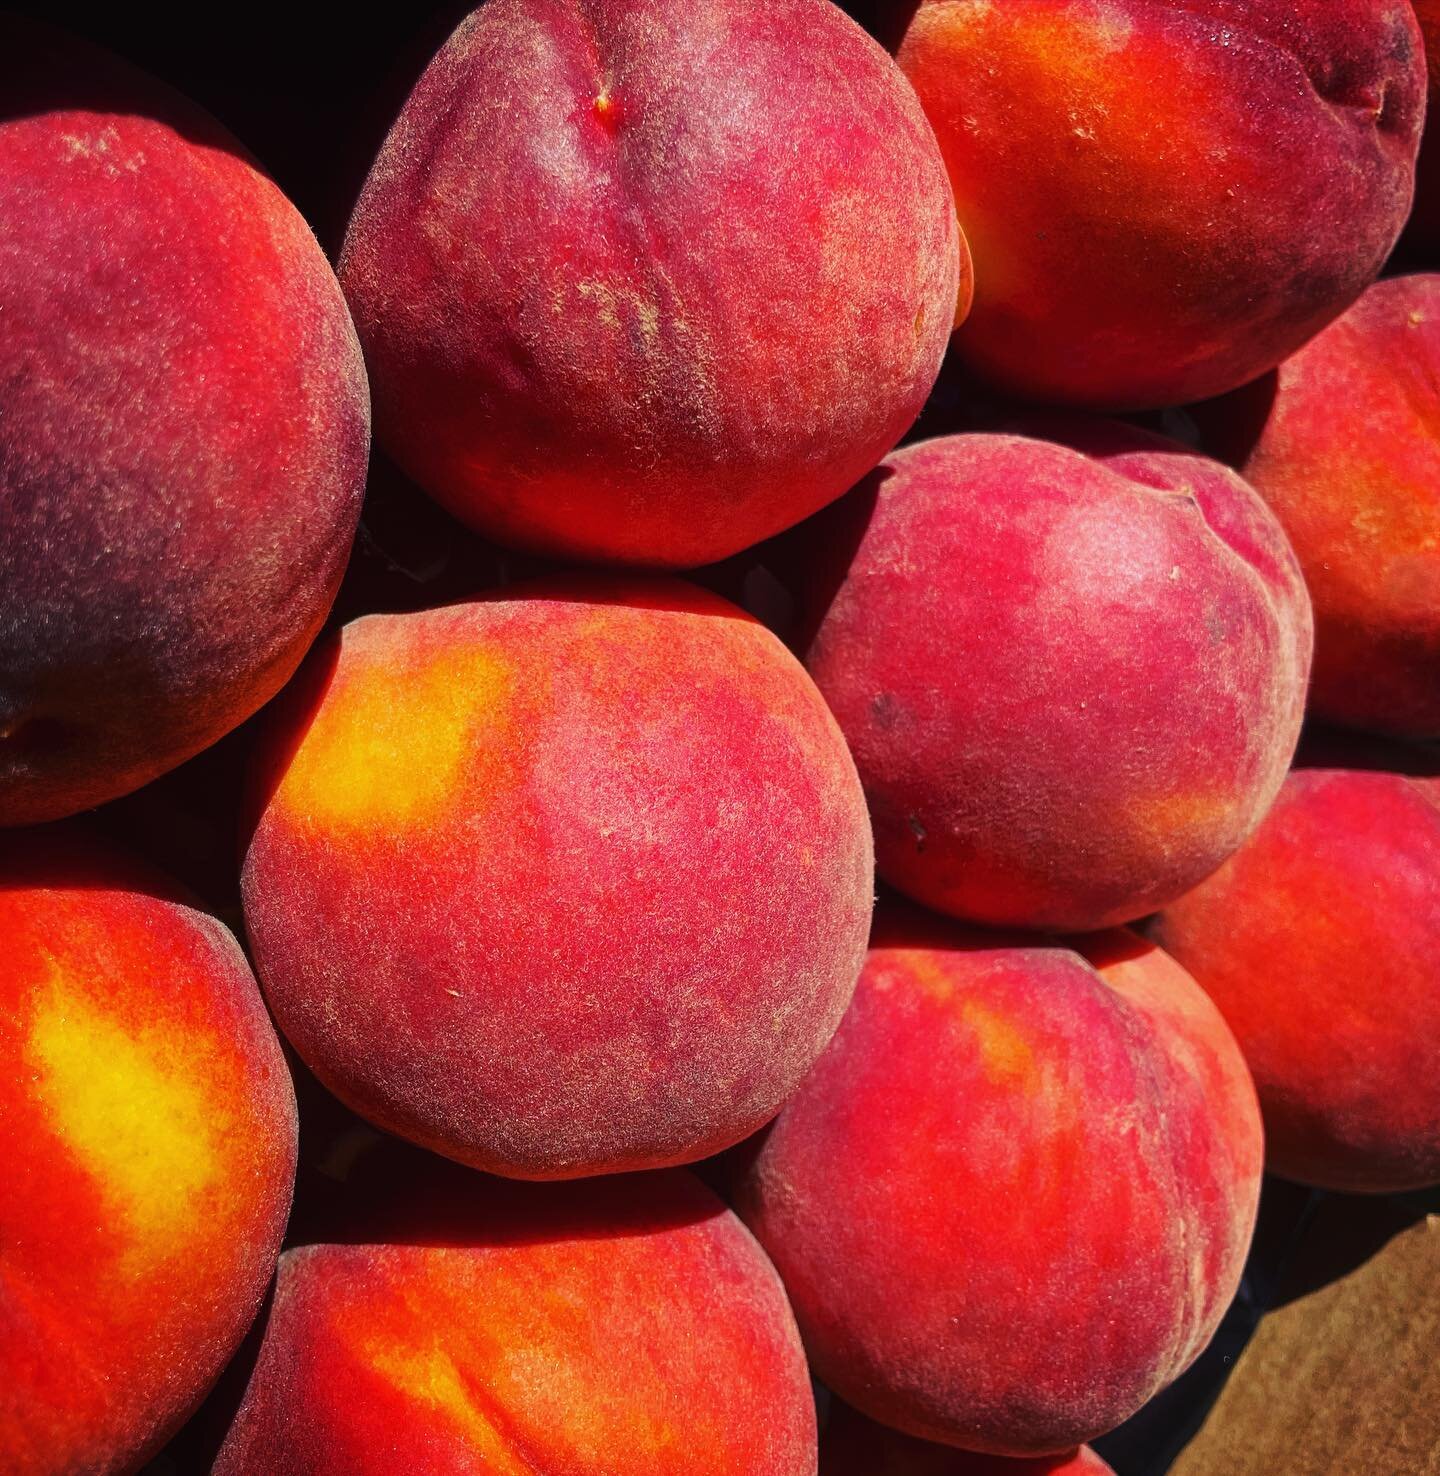 The #organic #SummerGlory 🍑 were just delivered! 🌞 😋 #jamonit #alamedafruitco #peachjam #eastbayeats #ediblemagazine #bestofalameda #jam #madeinalameda #preserves #seasonaleats